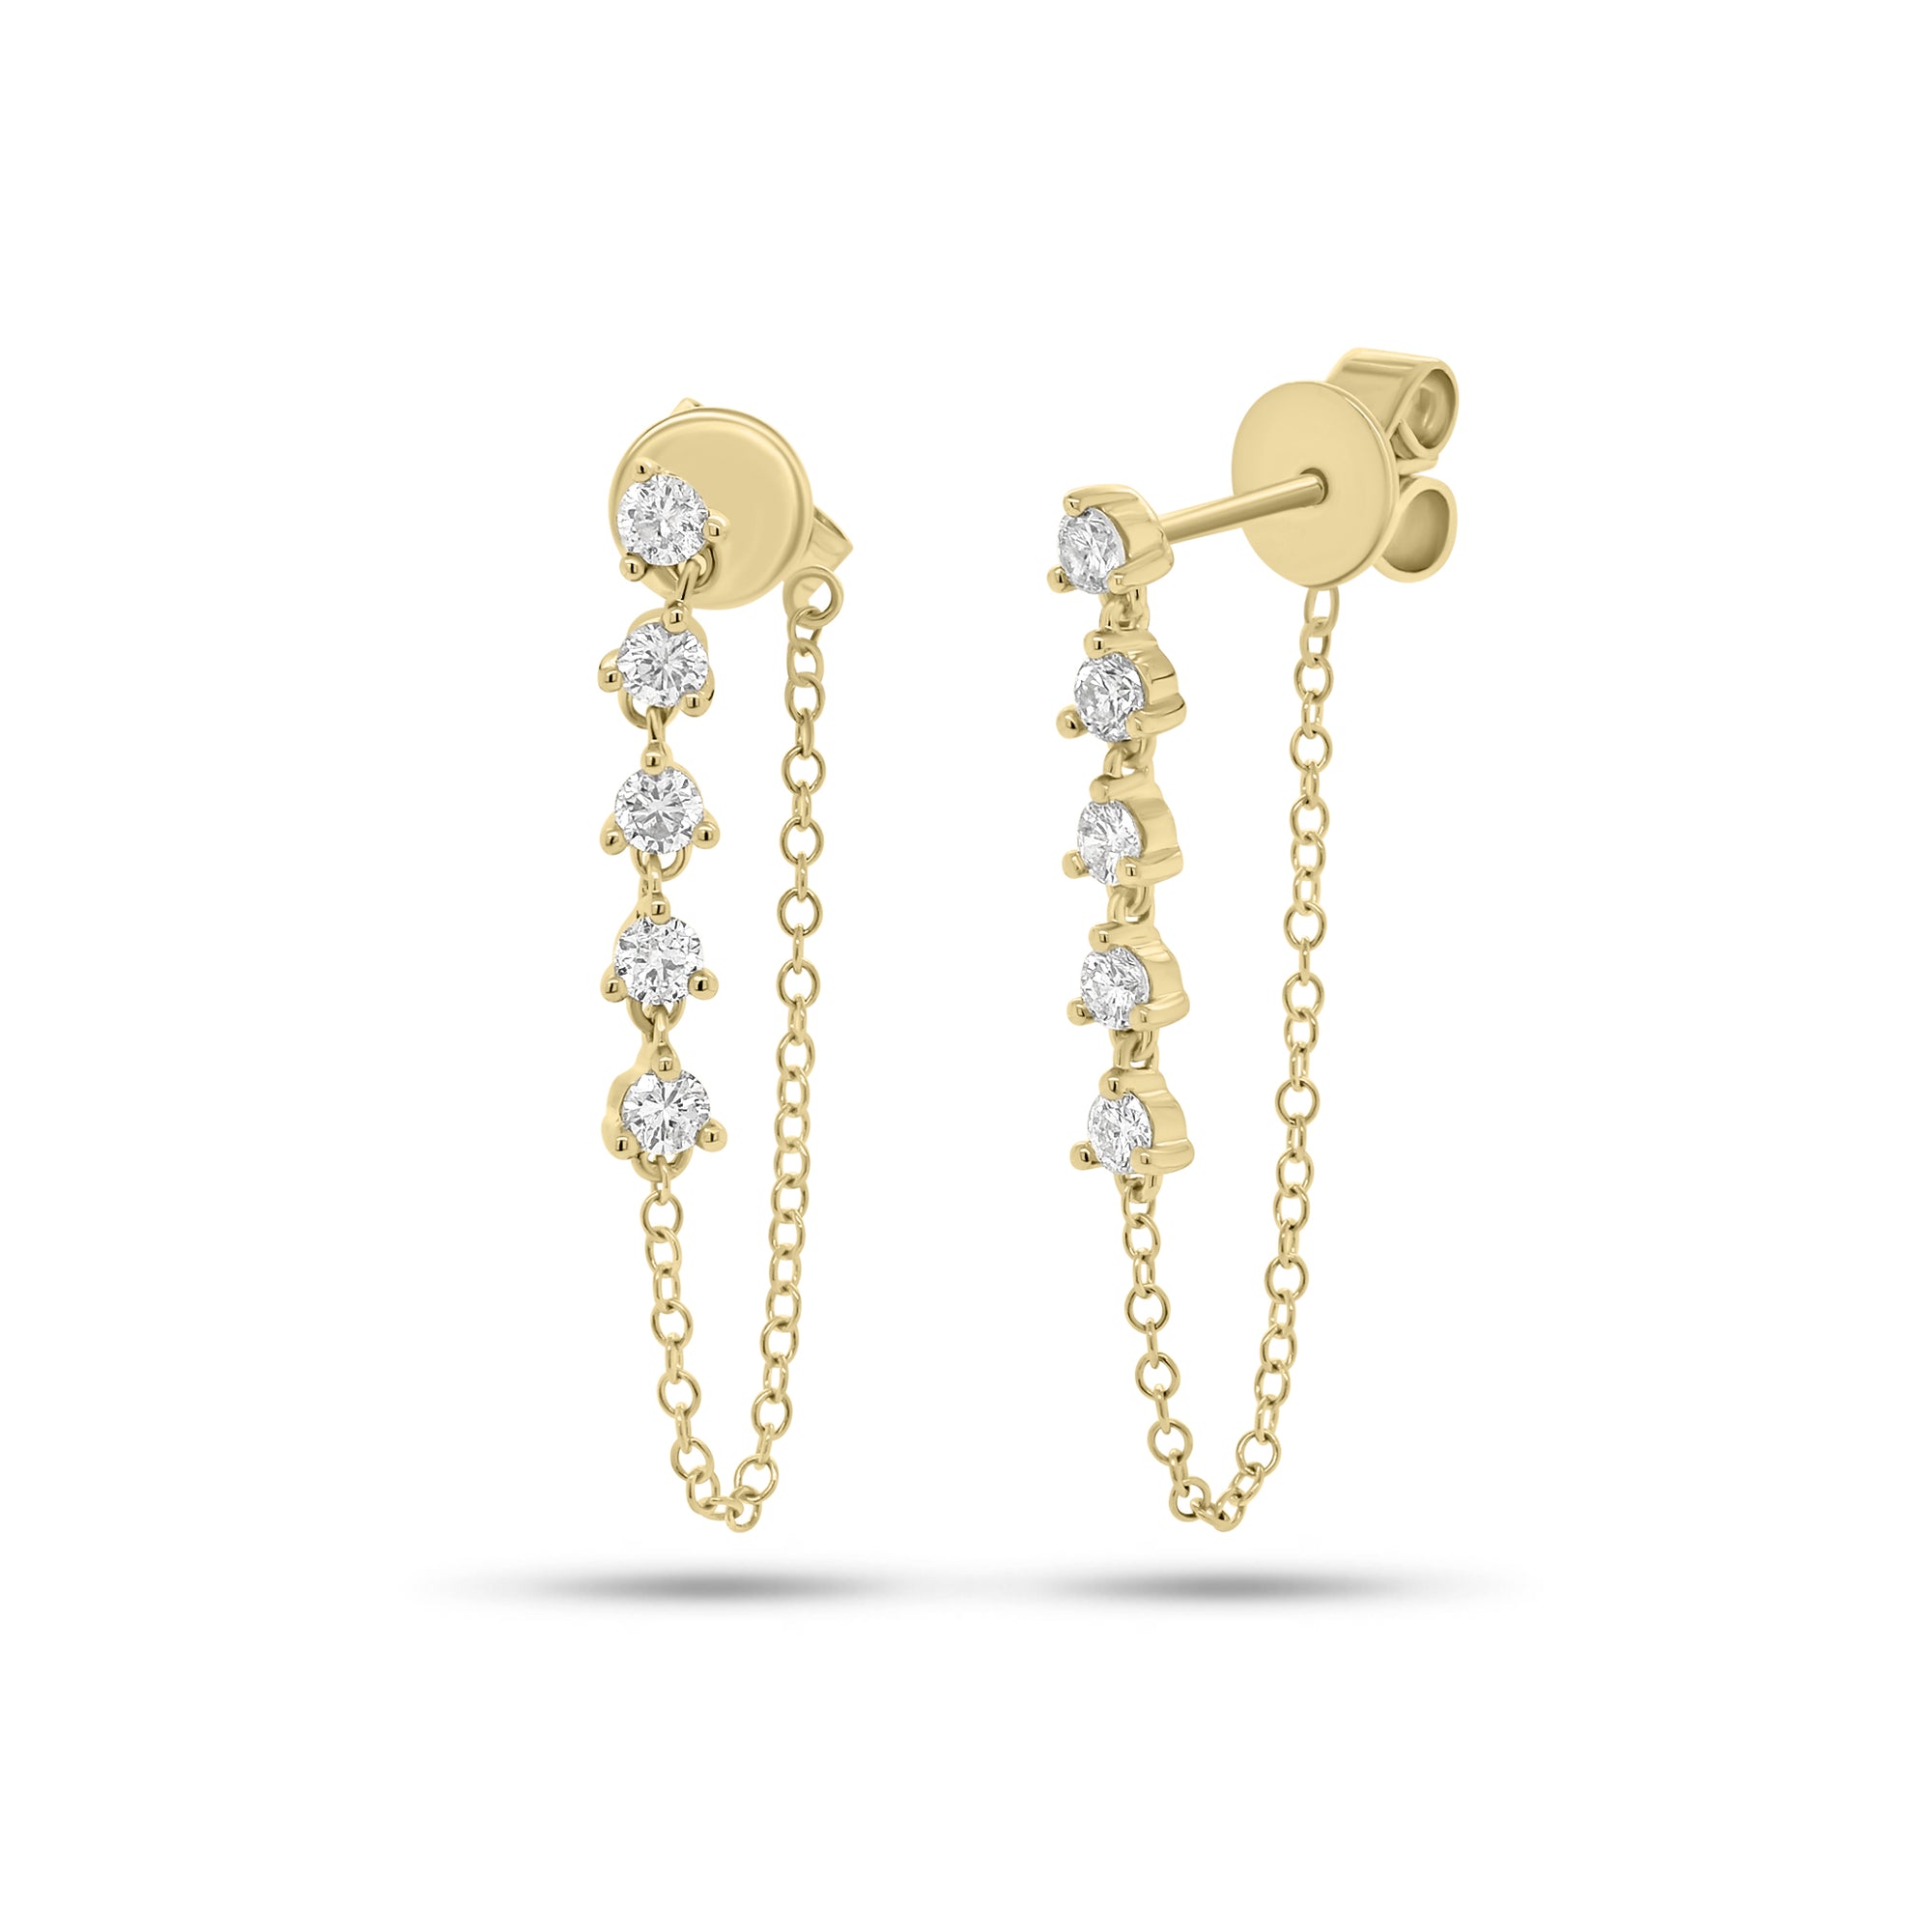 Multi-Diamond Chain Stud Earrings - 14K gold weighing 1.49 grams  - 10 round diamonds weighing 0.40 carats